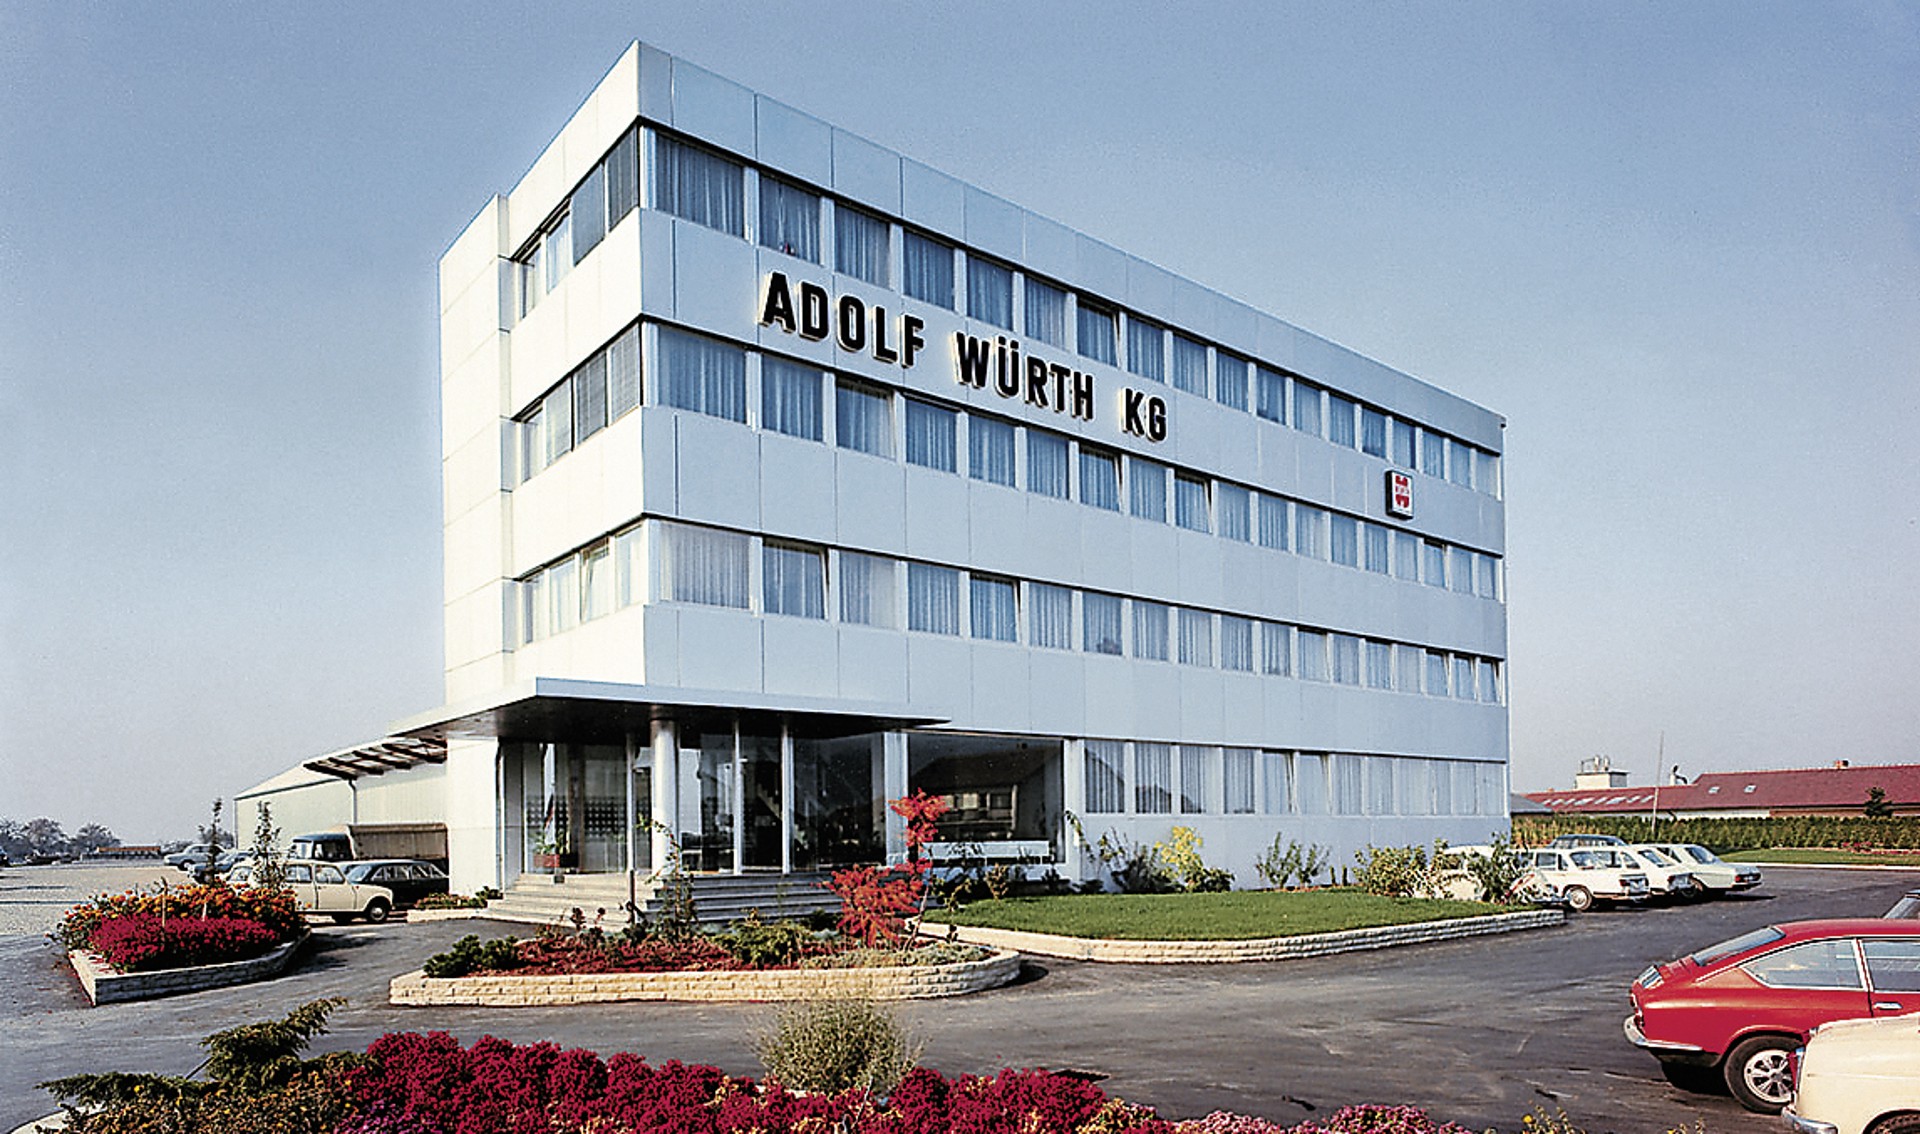 Headquarter of the Adolf Würth GmbH & Co. KG 1969